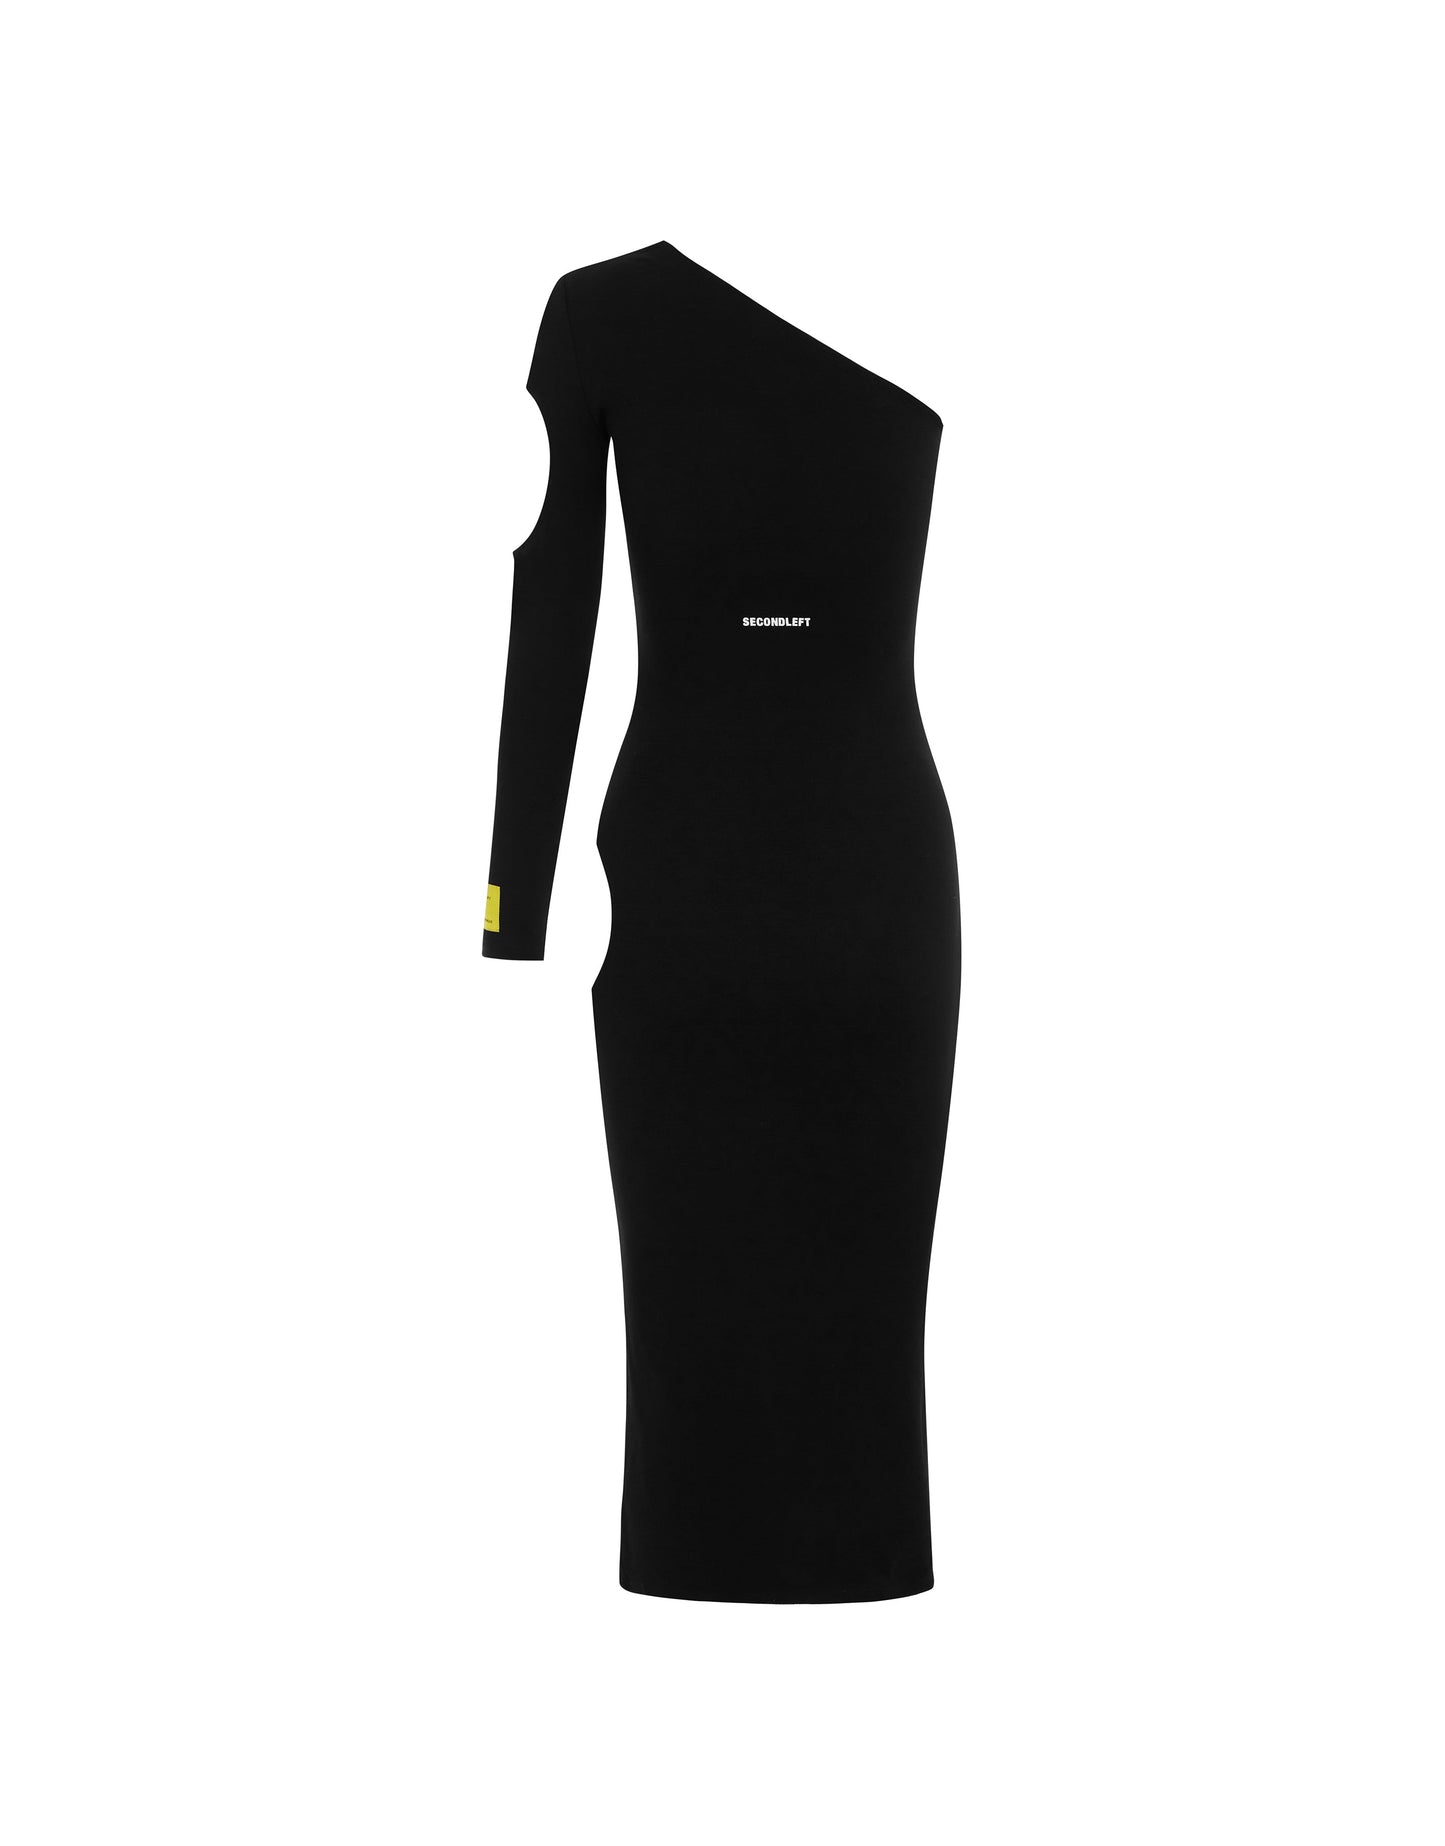 S1 One Sleeve Dress - Black